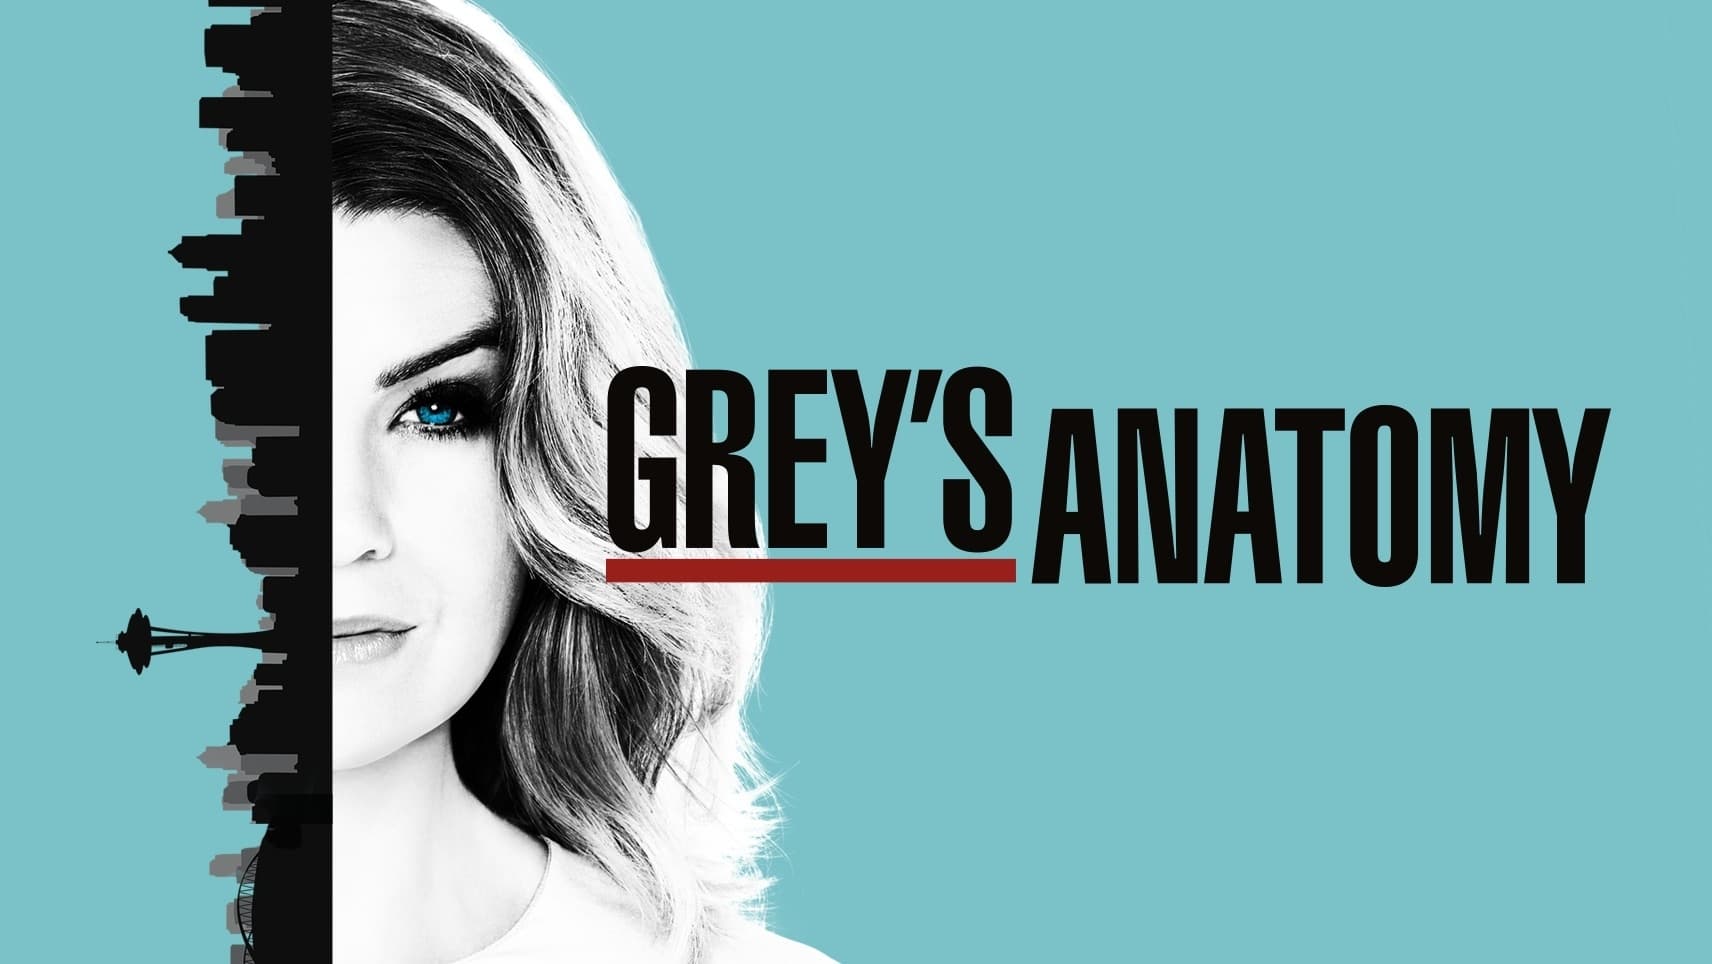 Anatomia de Grey - Season 11